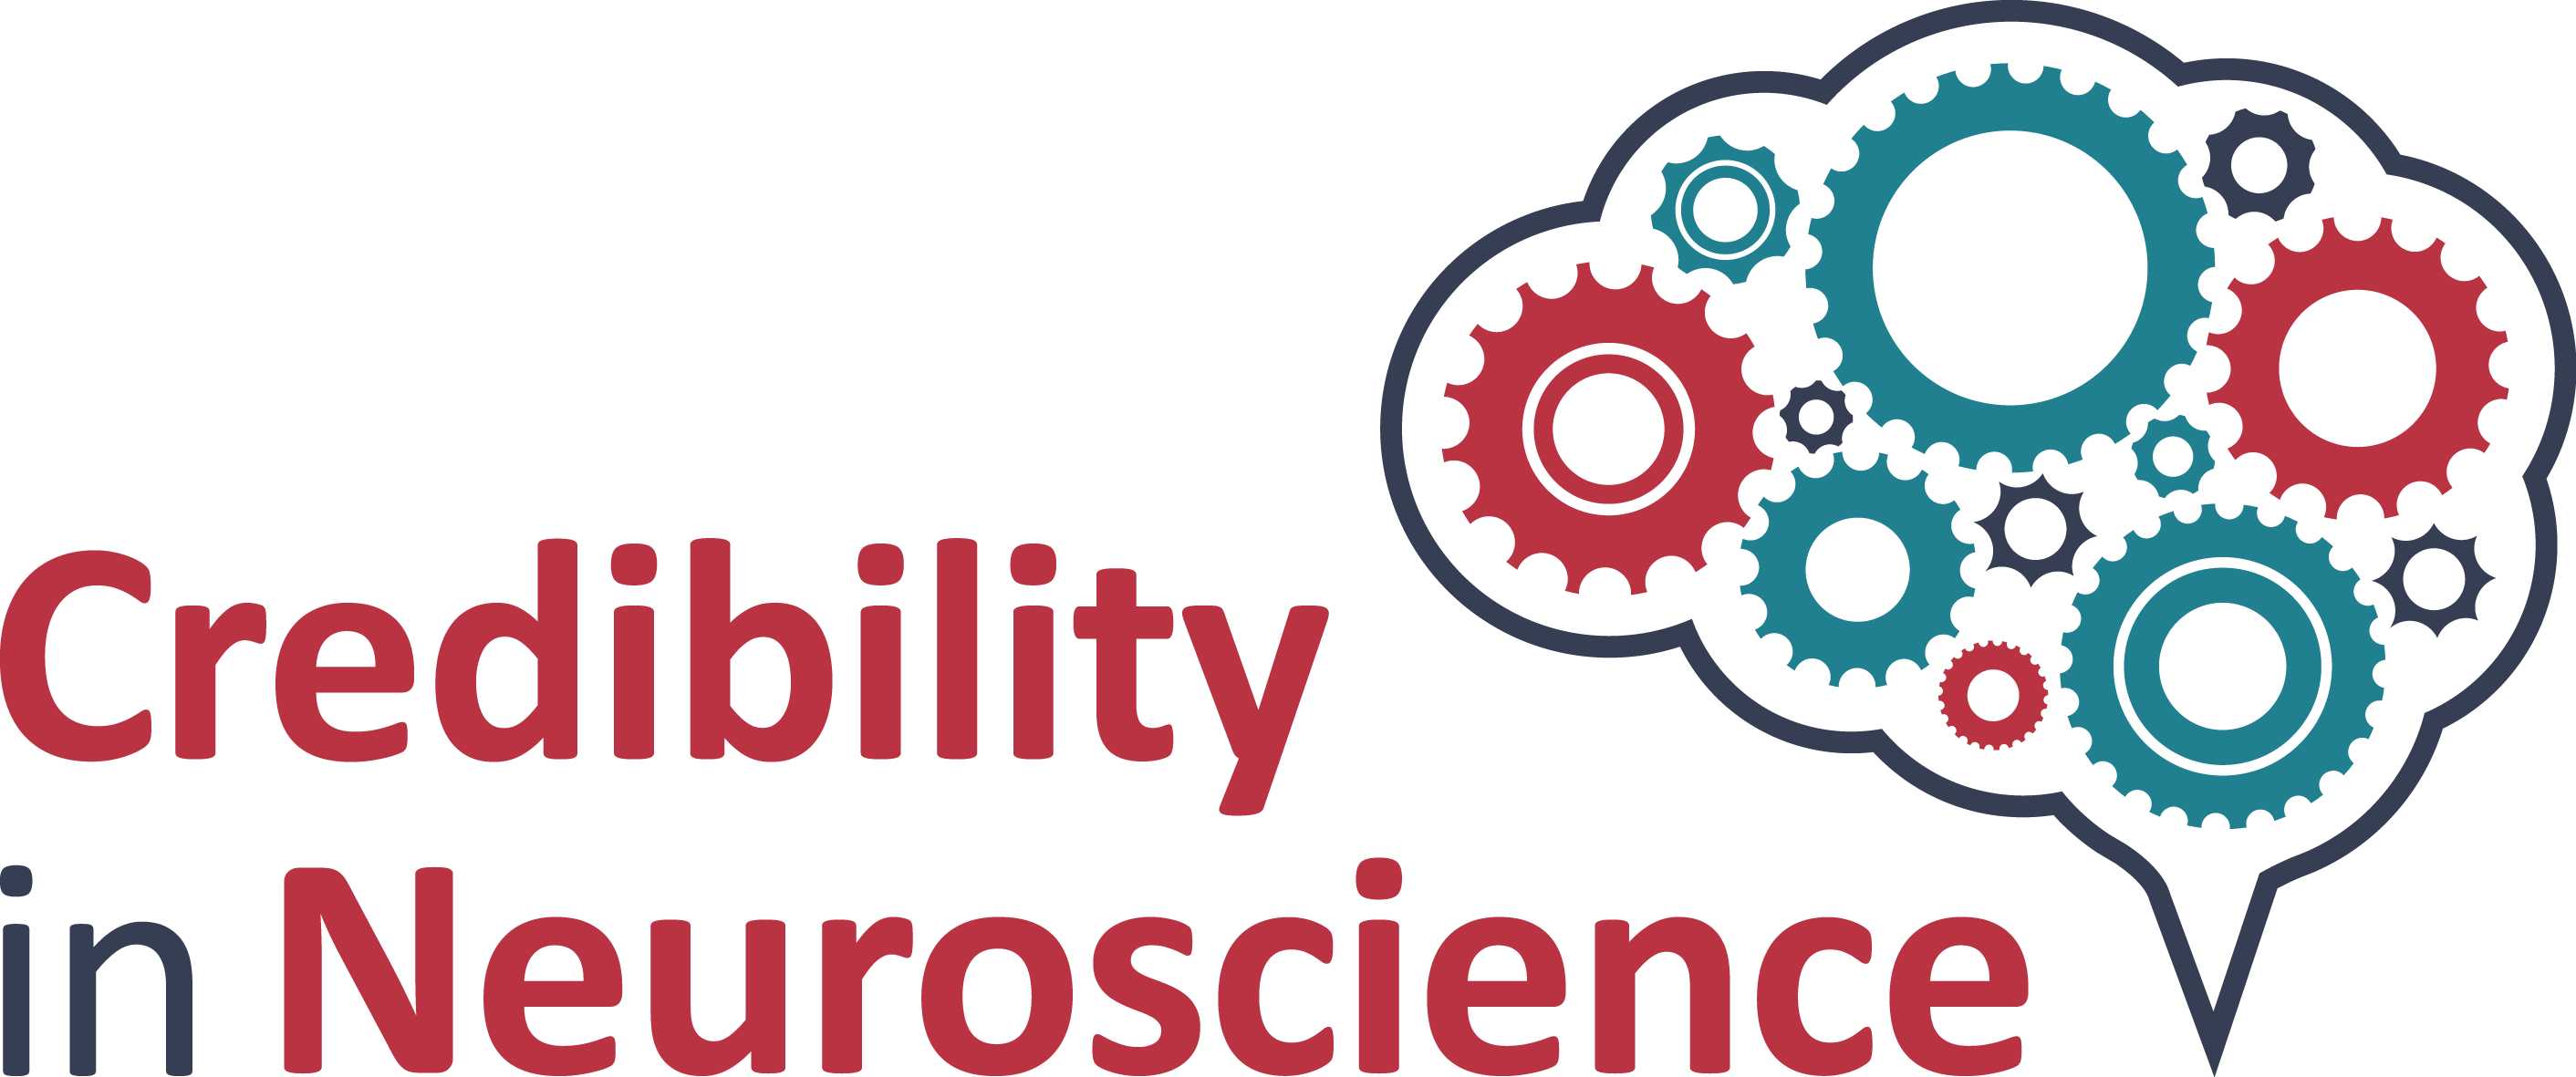 credibility in neuroscience logo